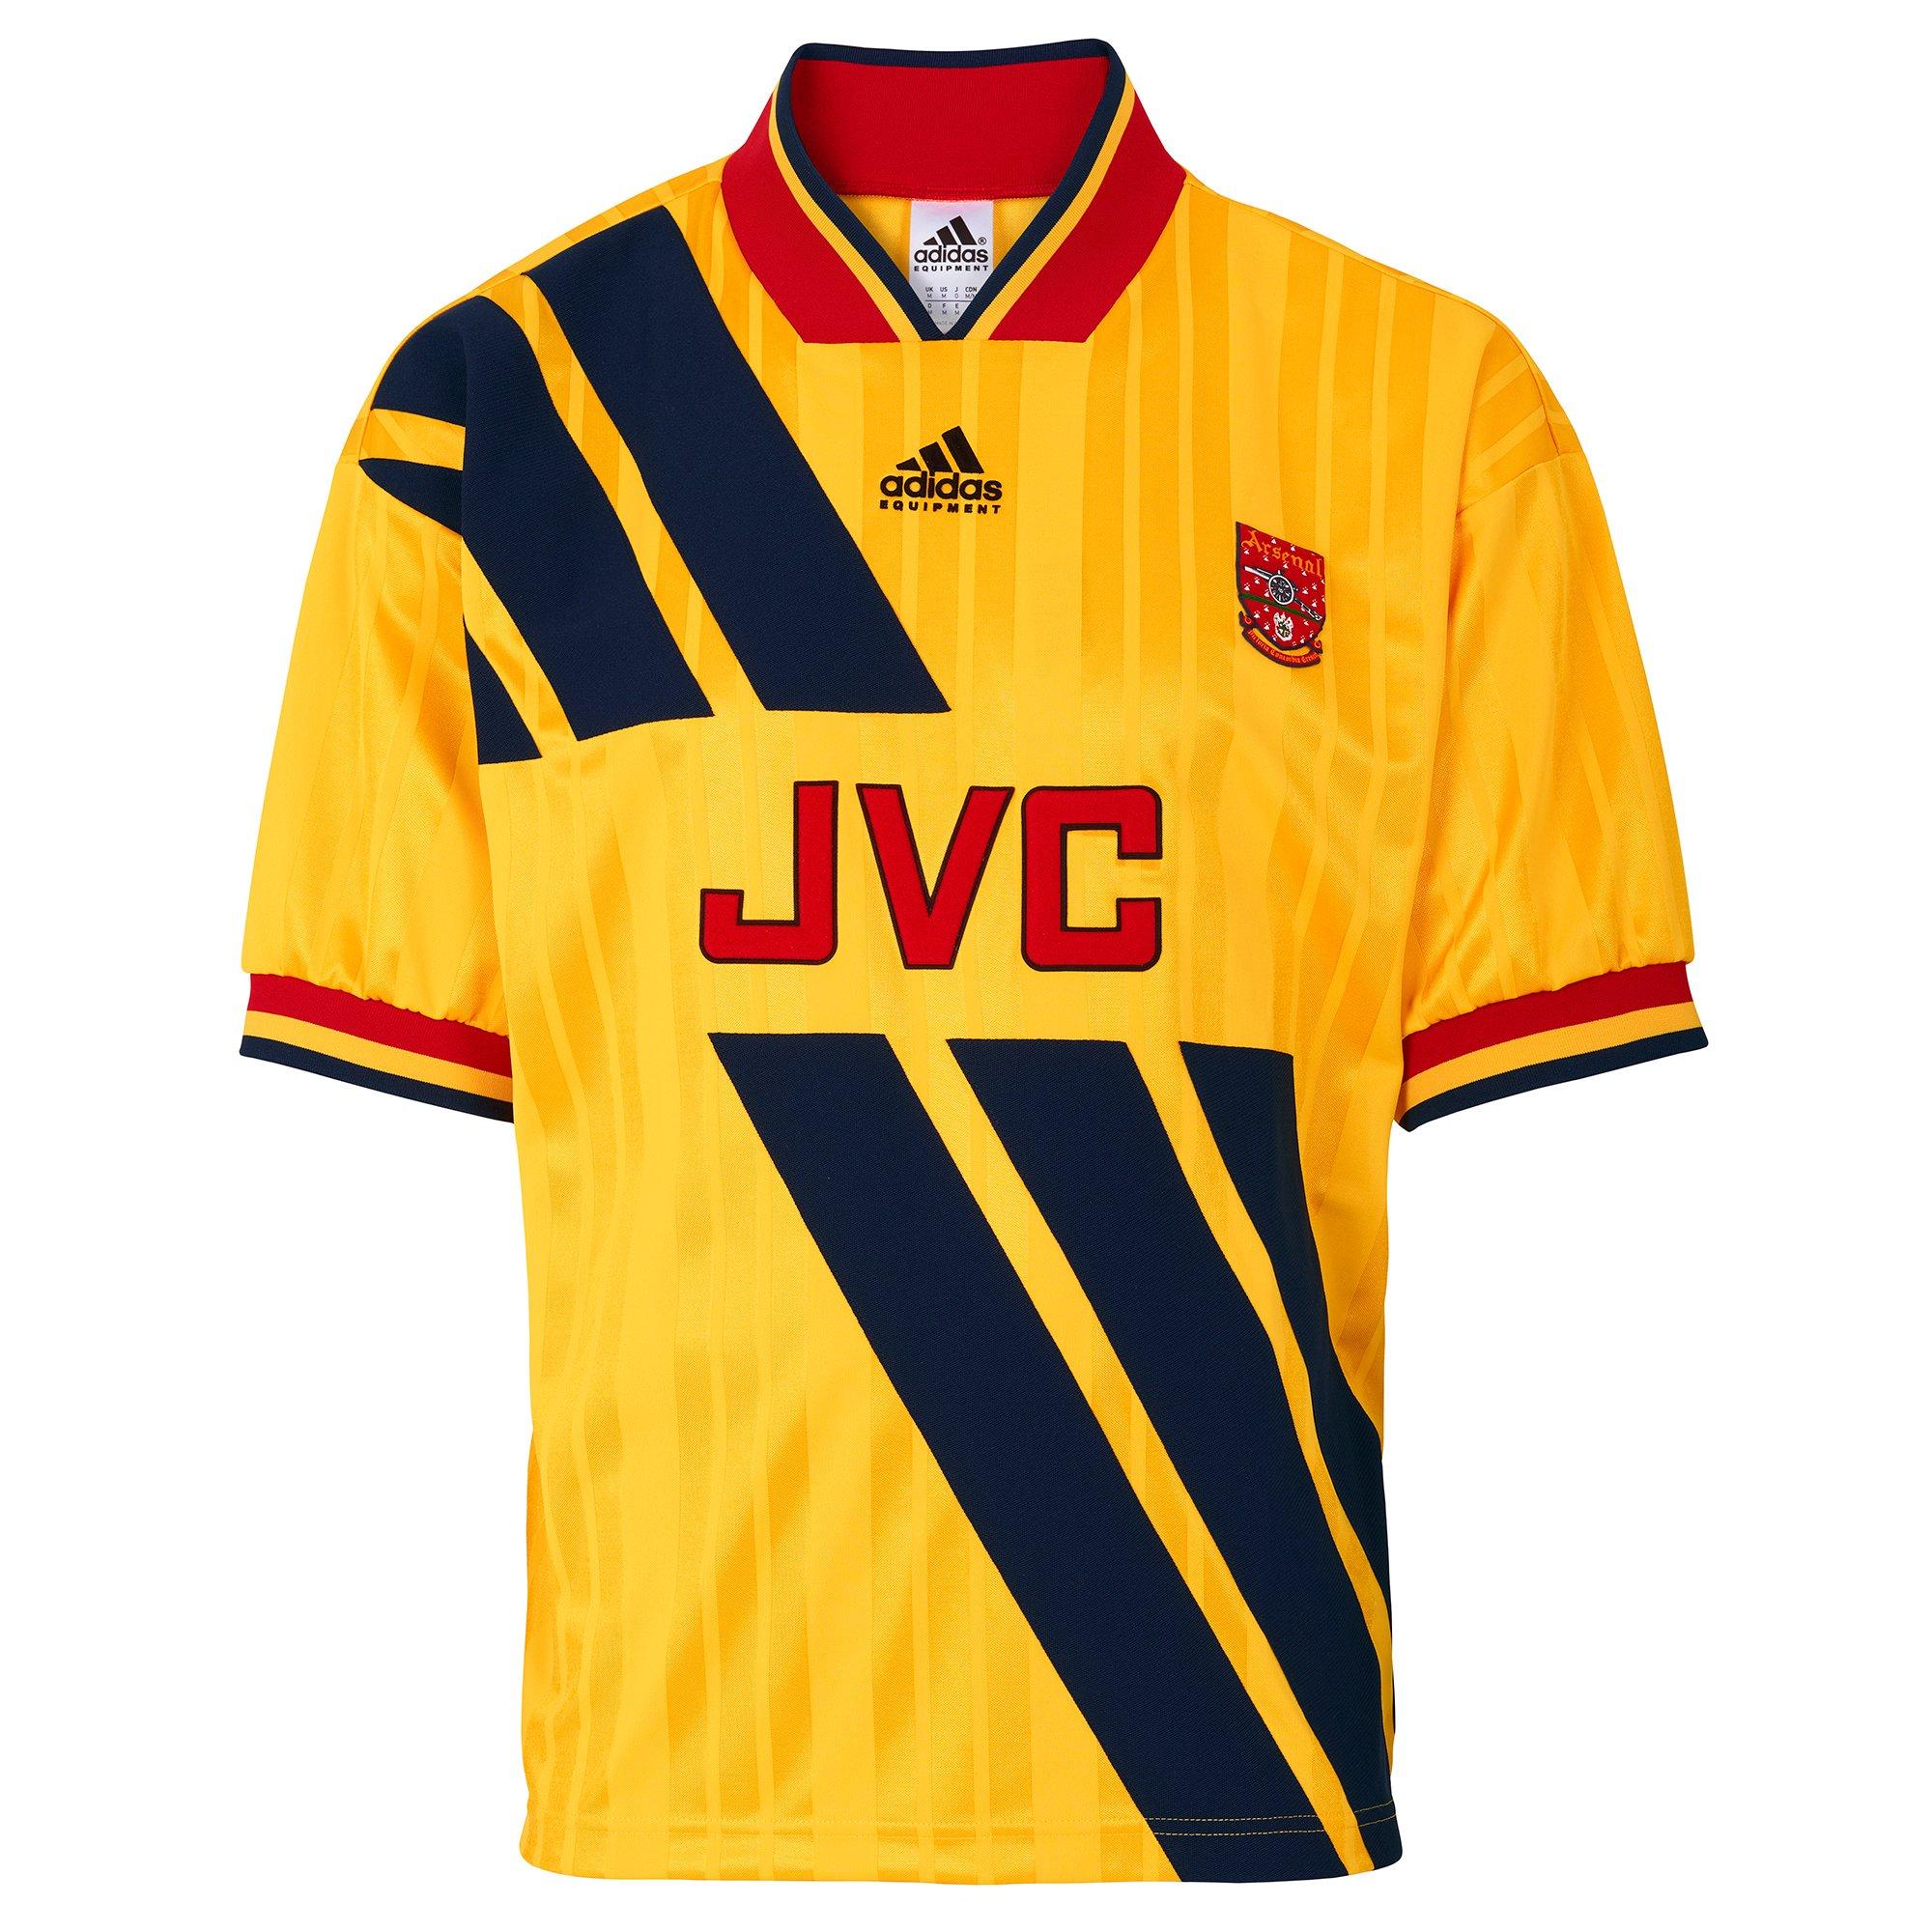 Arsenal Classic Football Shirts, Arsenal Vintage Kits, Gunners